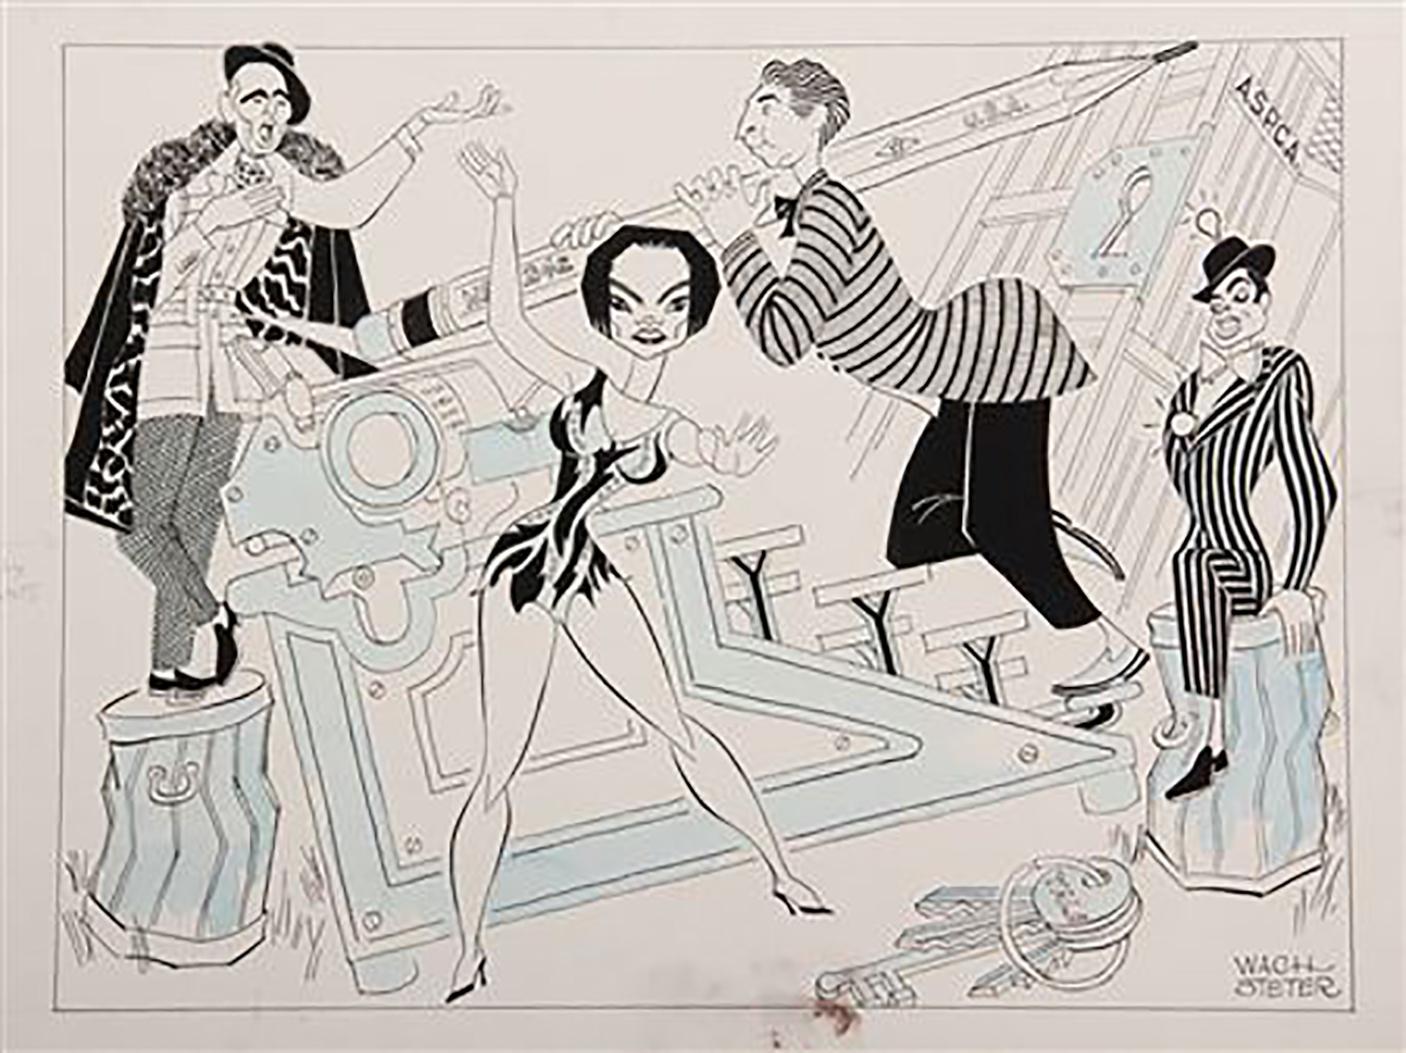 George Wachsteter Figurative Art - 1957 Broadway Musical, "Shinbone Alley"